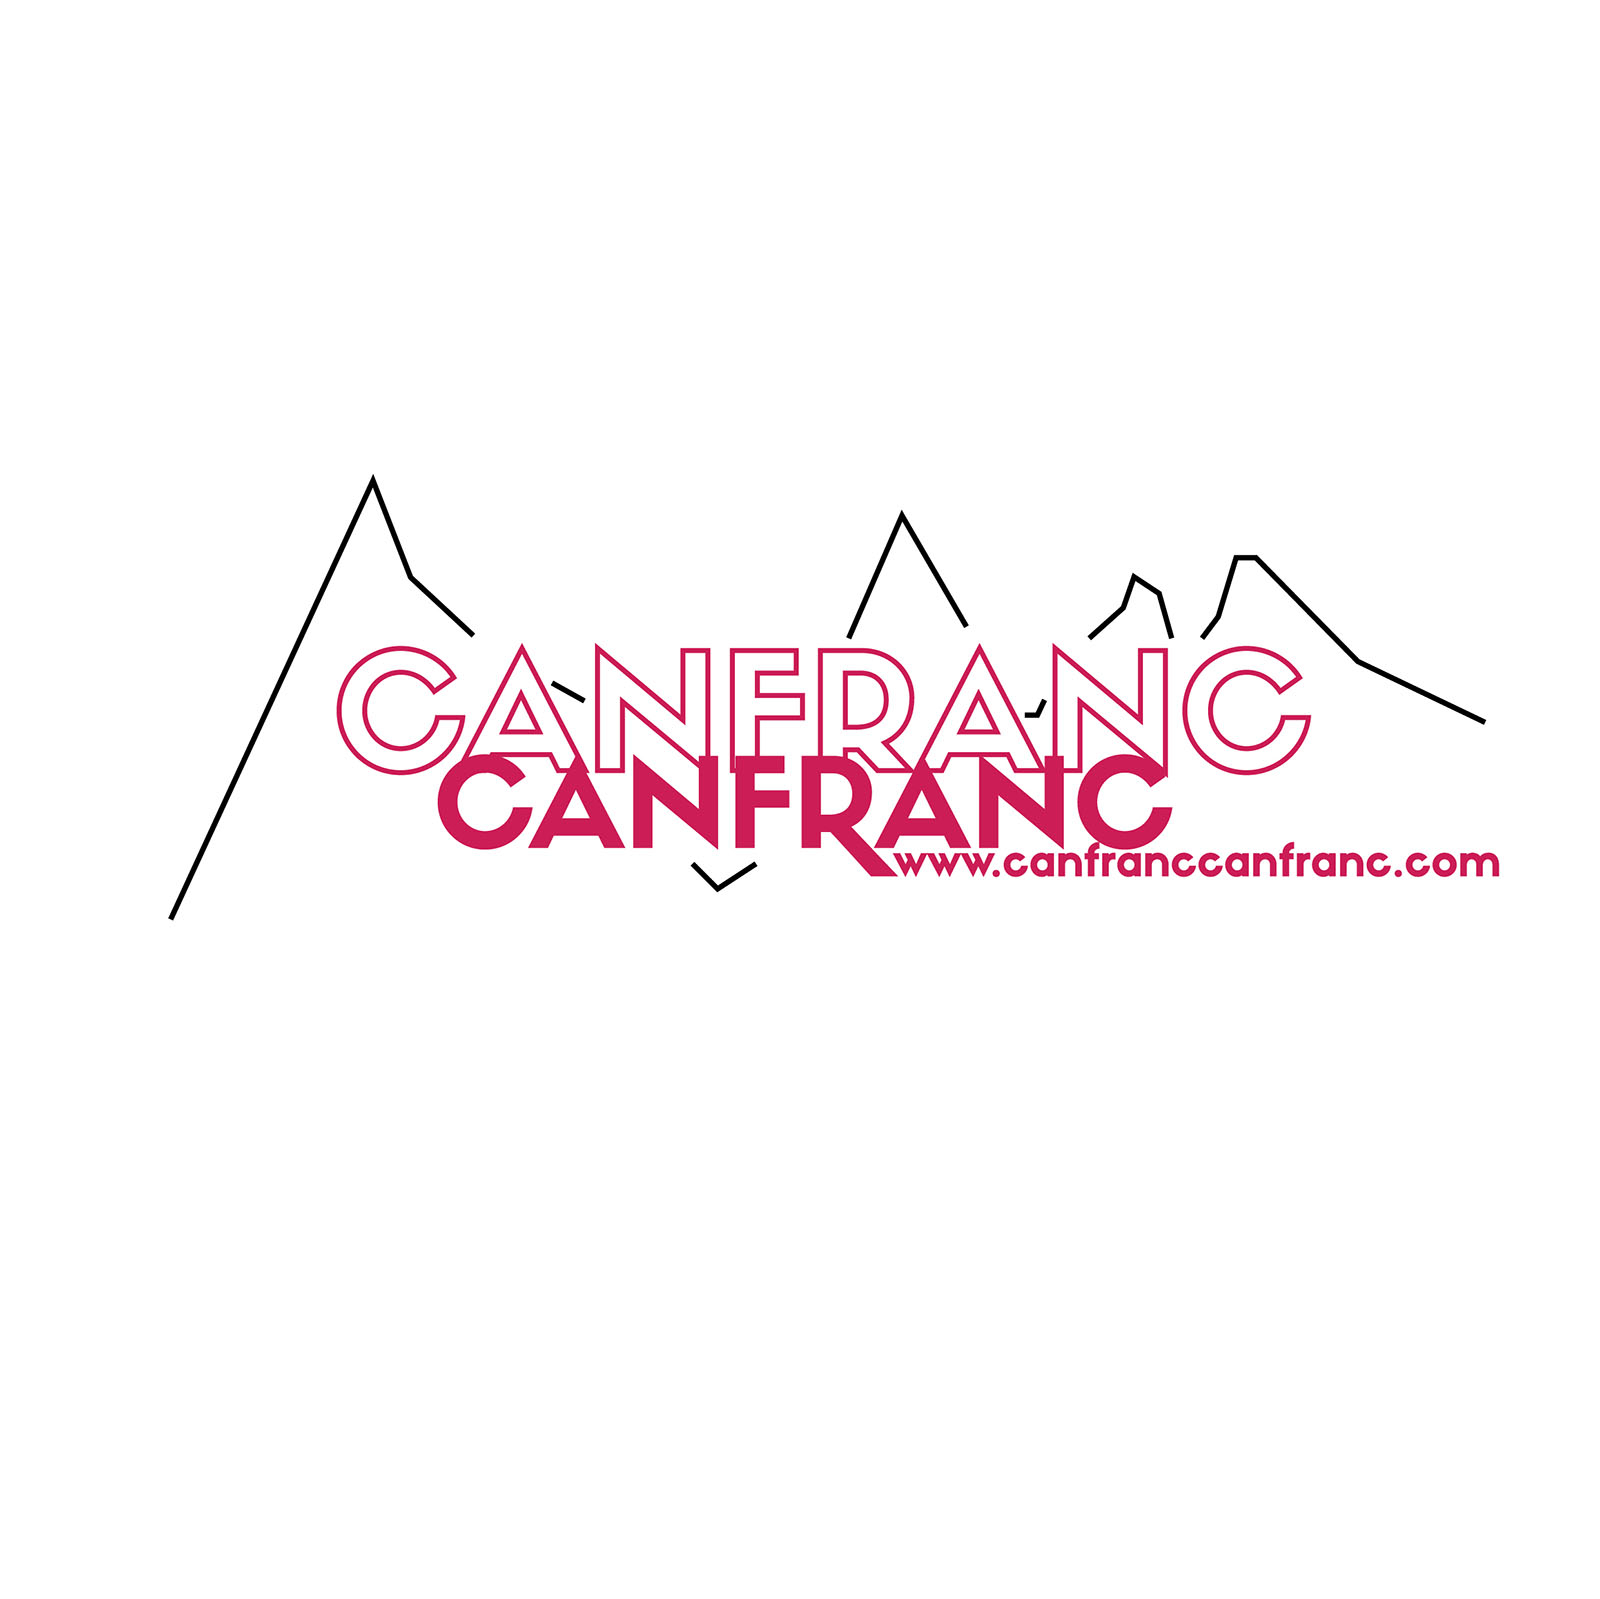 CANFRANC-CANFRANC 2019 - Inscríbete